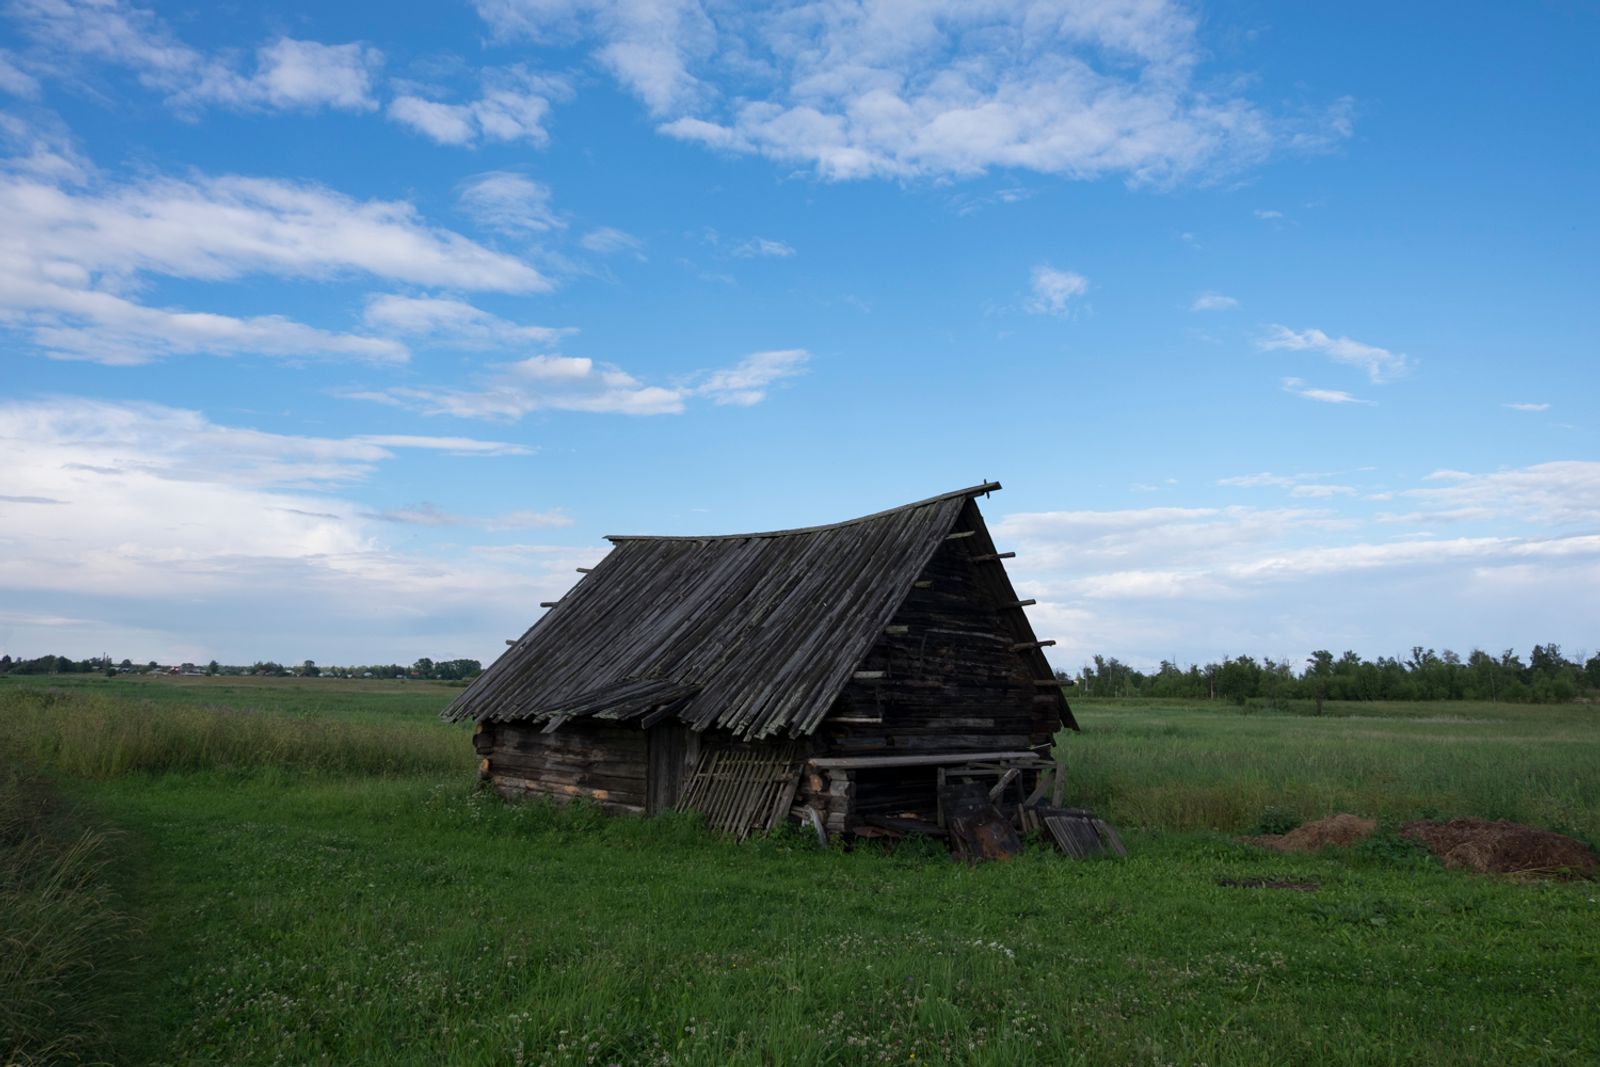 © Elena Kholkina - An abandoned hut